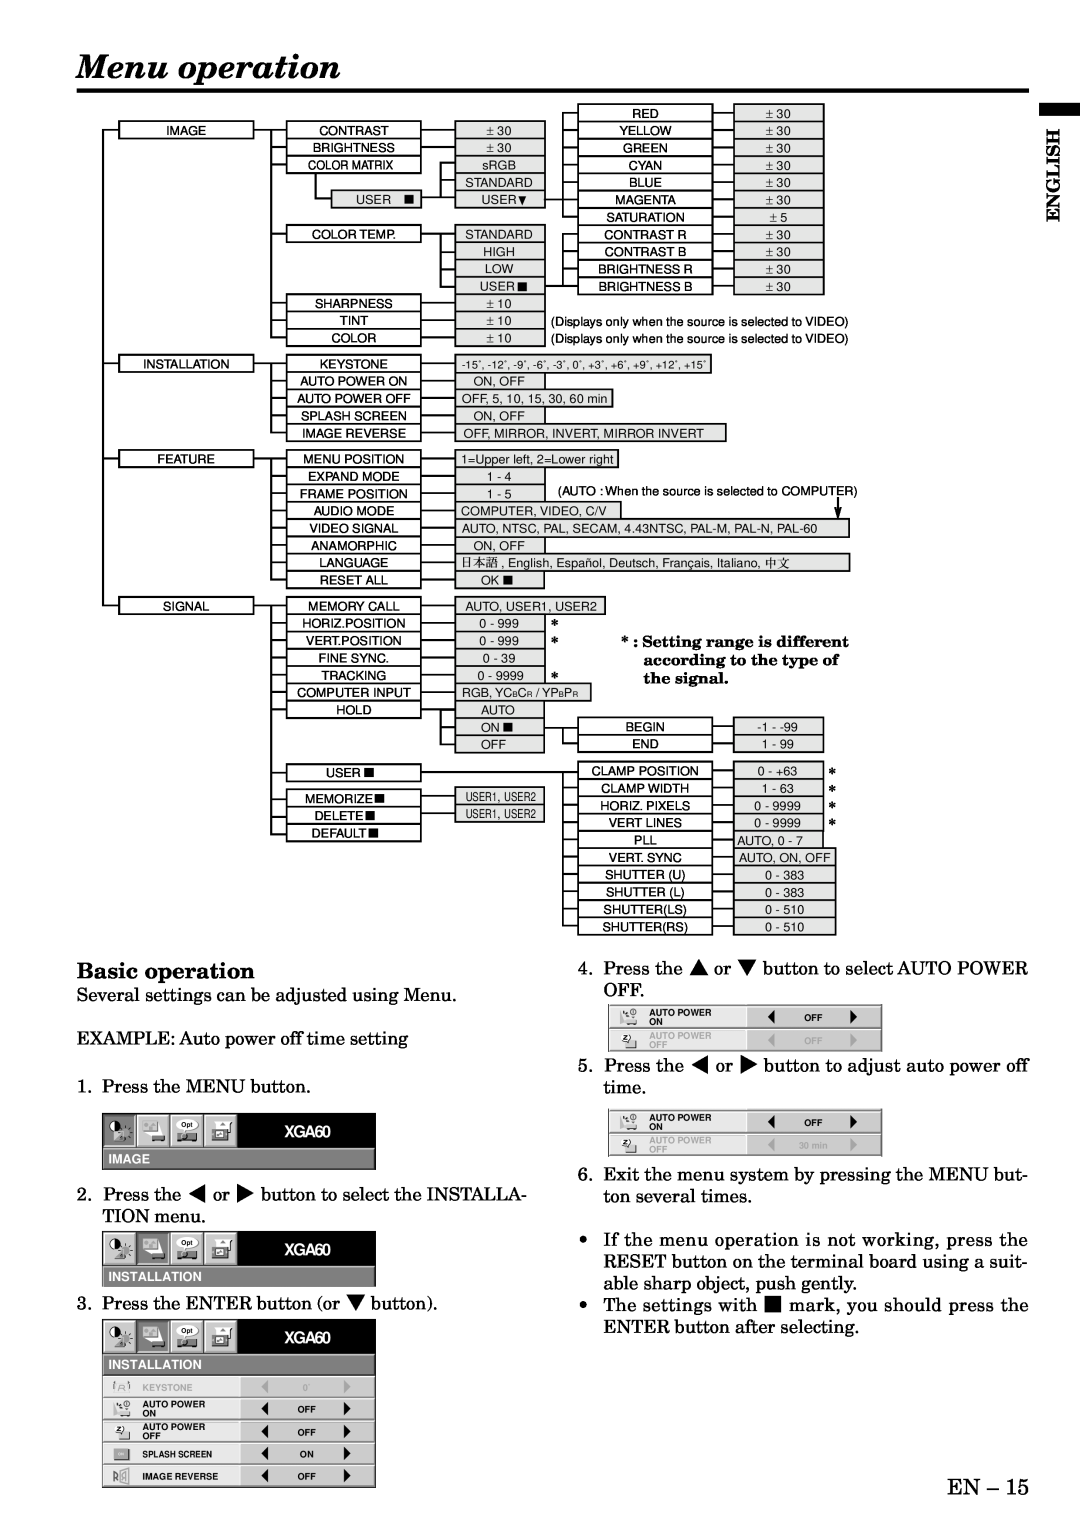 Mitsubishi Electronics X80 user manual Menu operation, Basic operation, English 